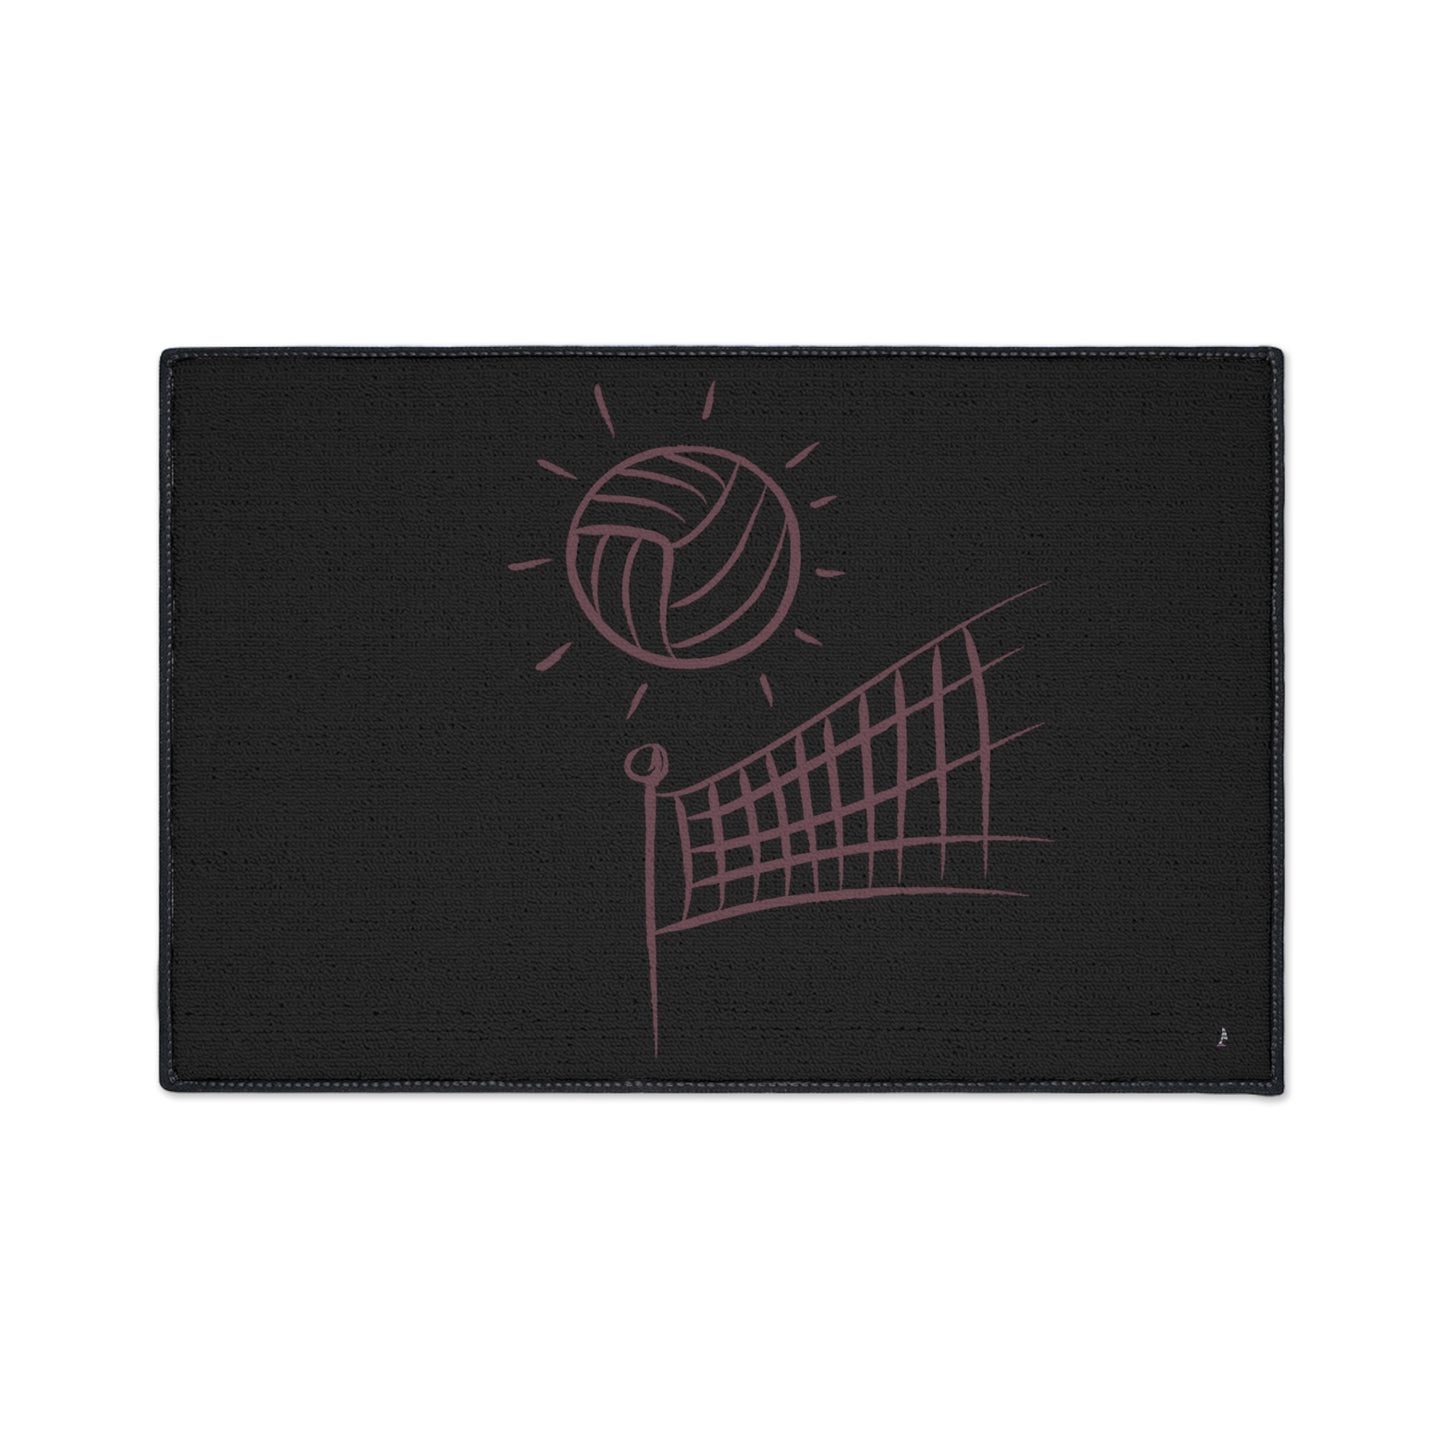 Heavy Duty Floor Mat: Volleyball Black